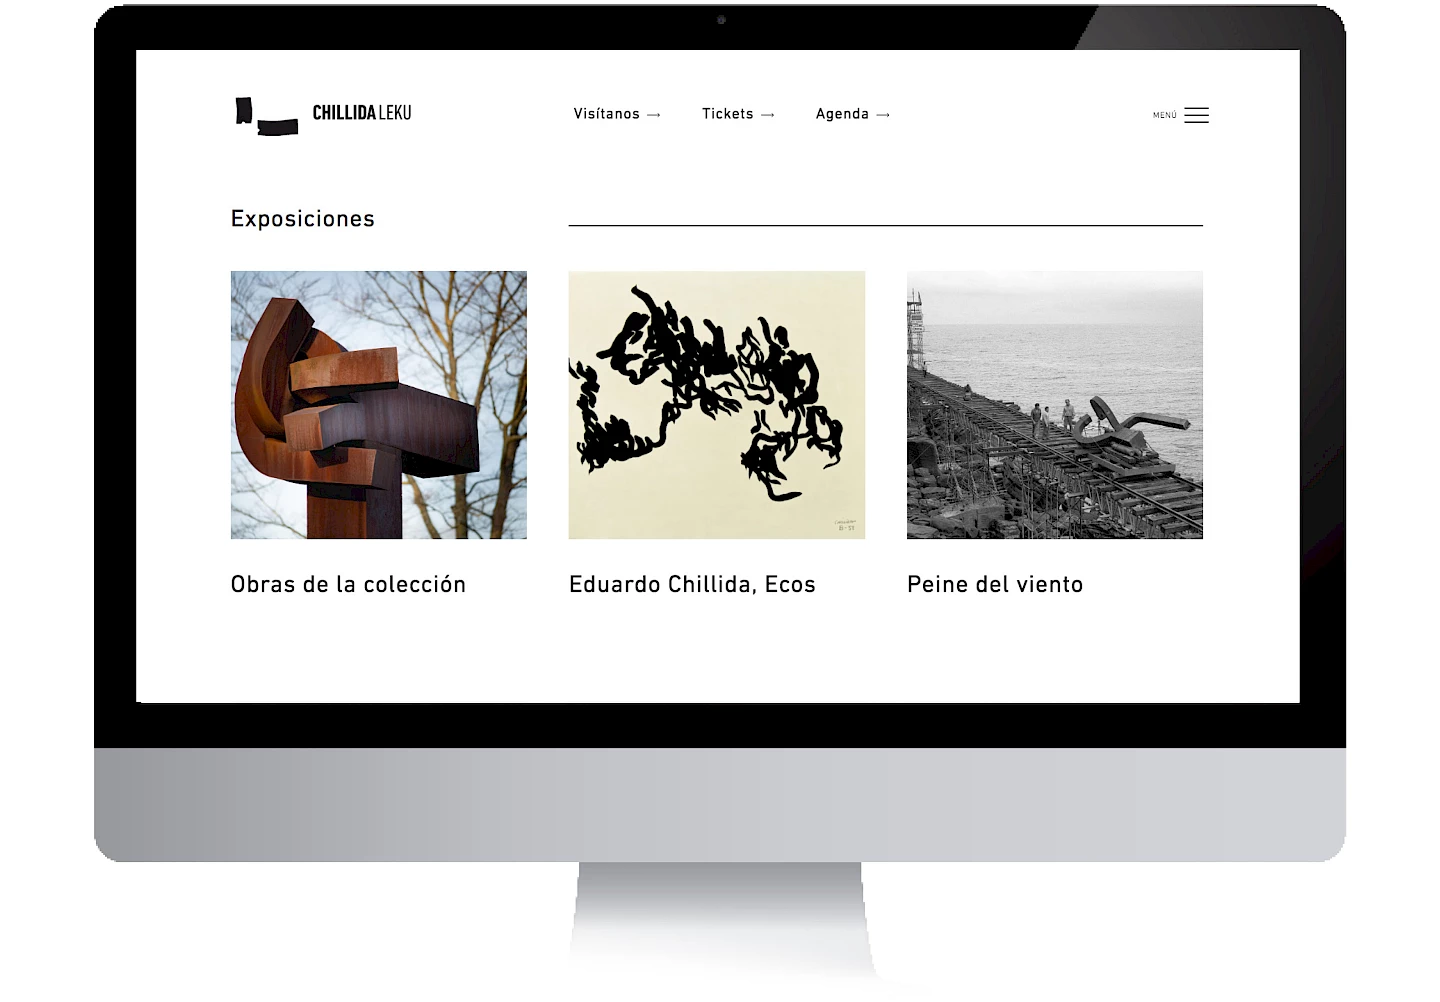 03 chillida social digital media culture leku branding move museo website 